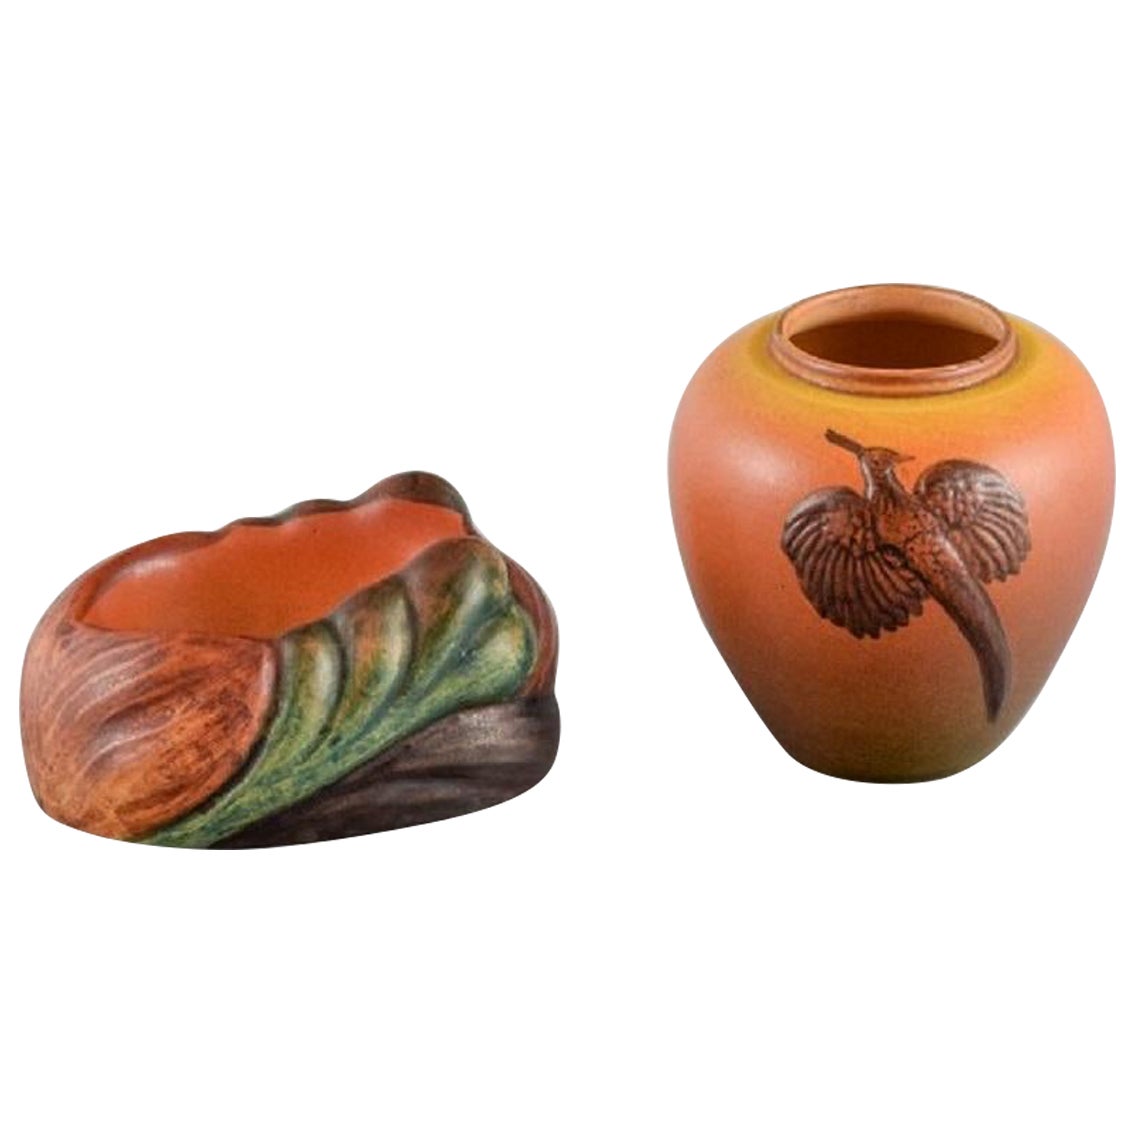 Ipsens Denmark, Pipe Holder and Vase in Hand-Painted Glazed Ceramic For Sale